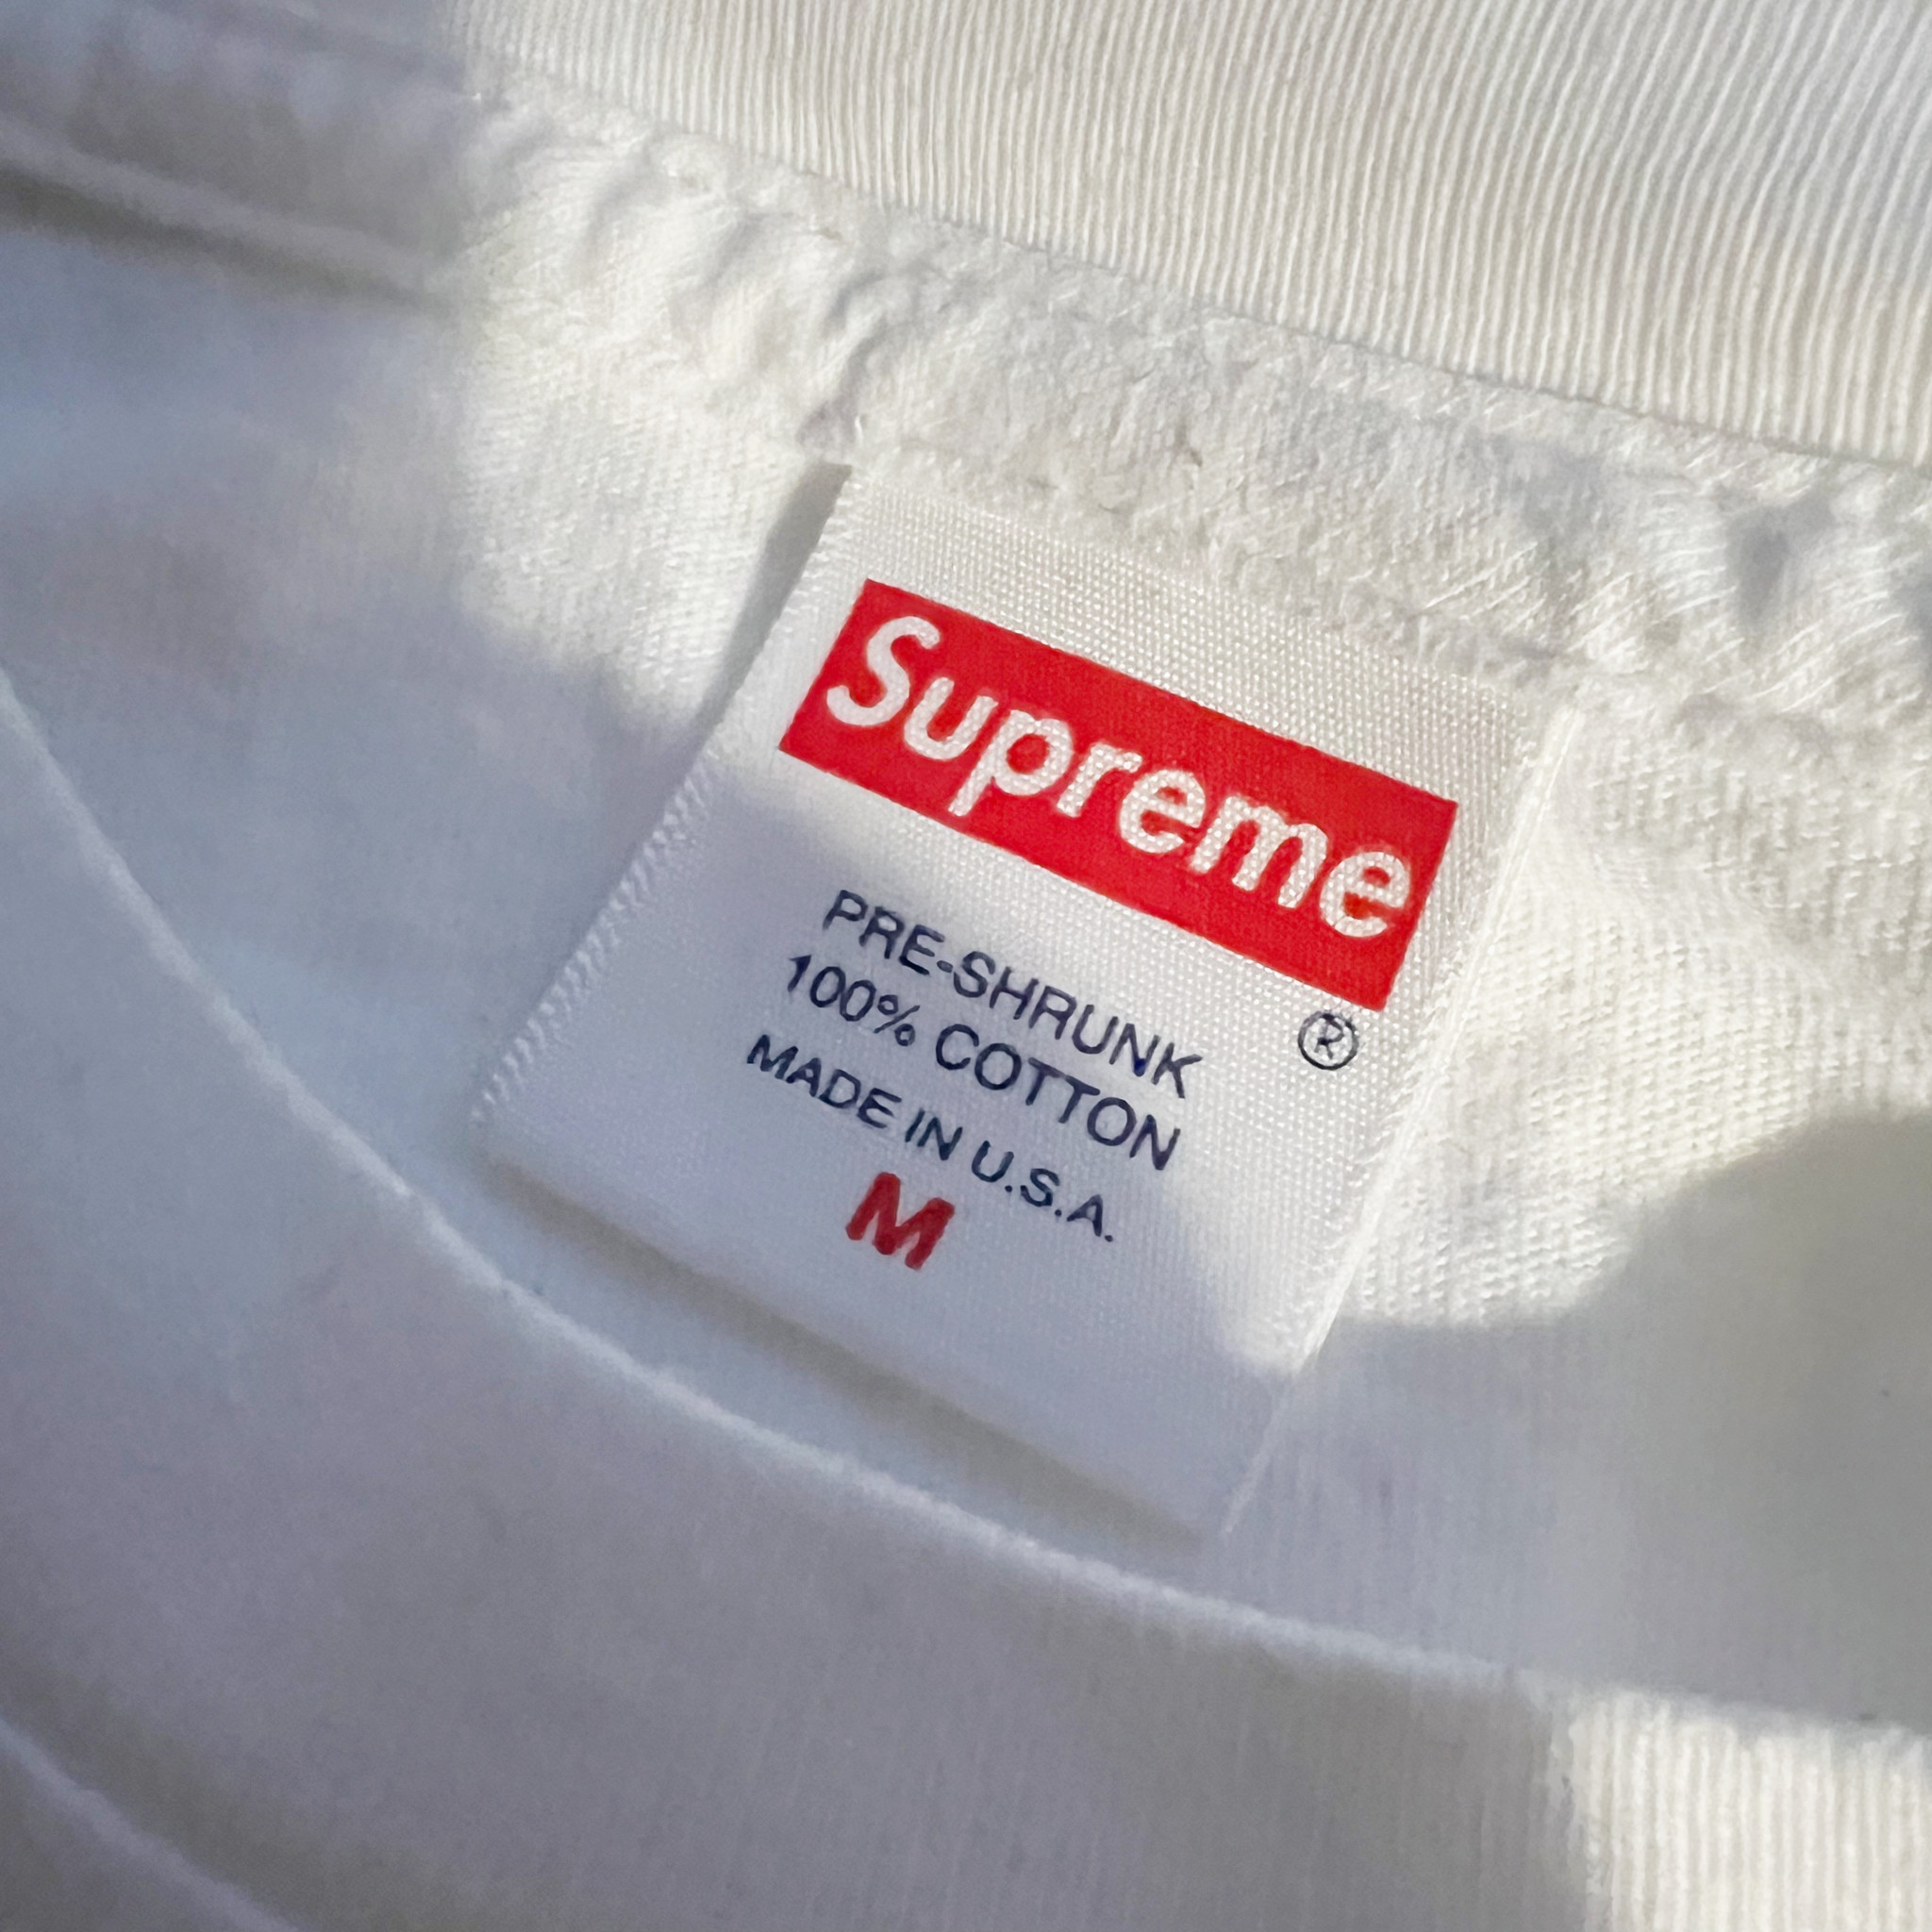 Supreme White Box Logo Long Sleeve T Shirt - Oliver's Archive